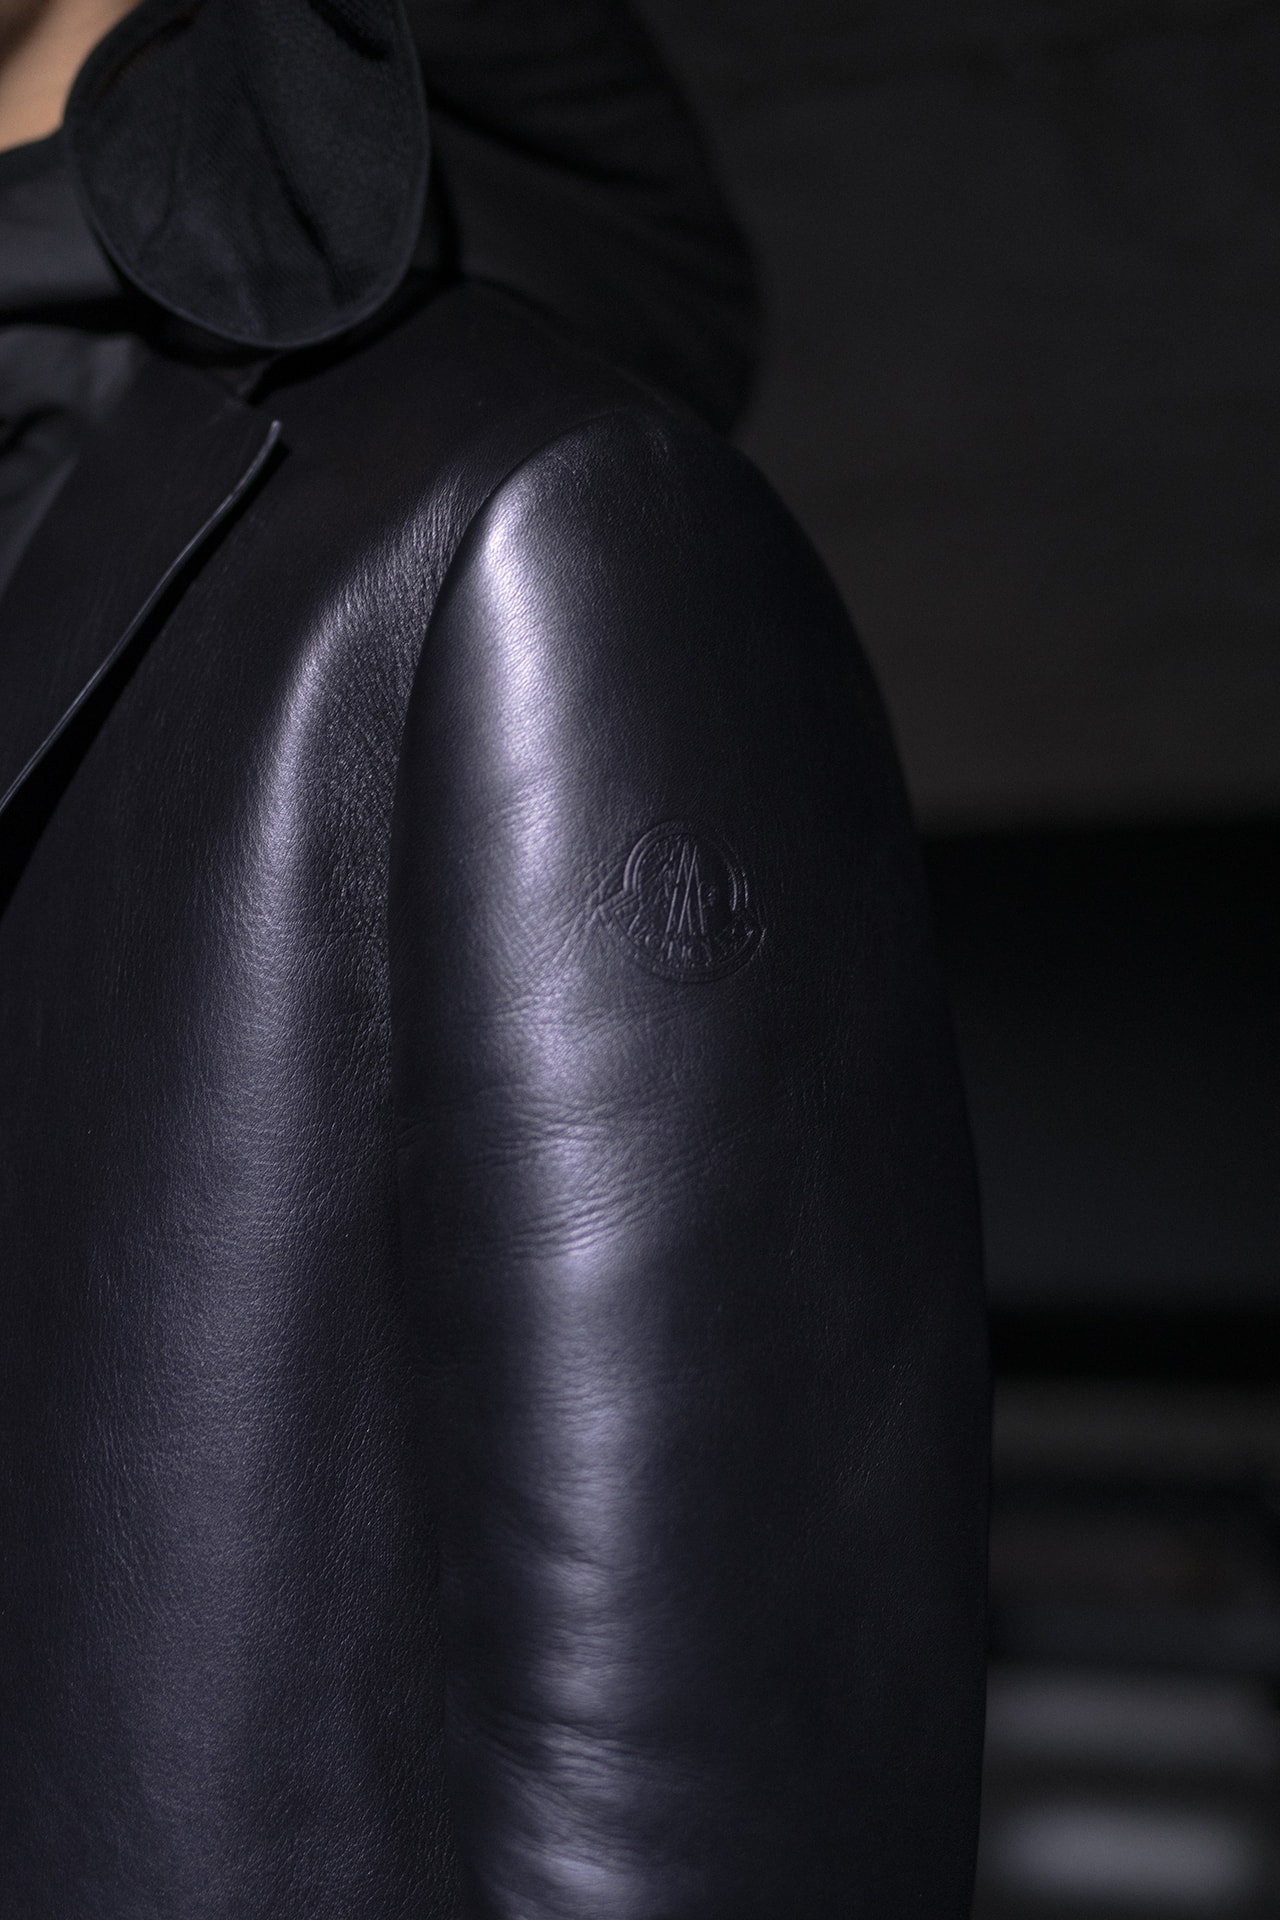 moncler genius milan fashion week presentation alyx matthew williams collaboration leather jacket black